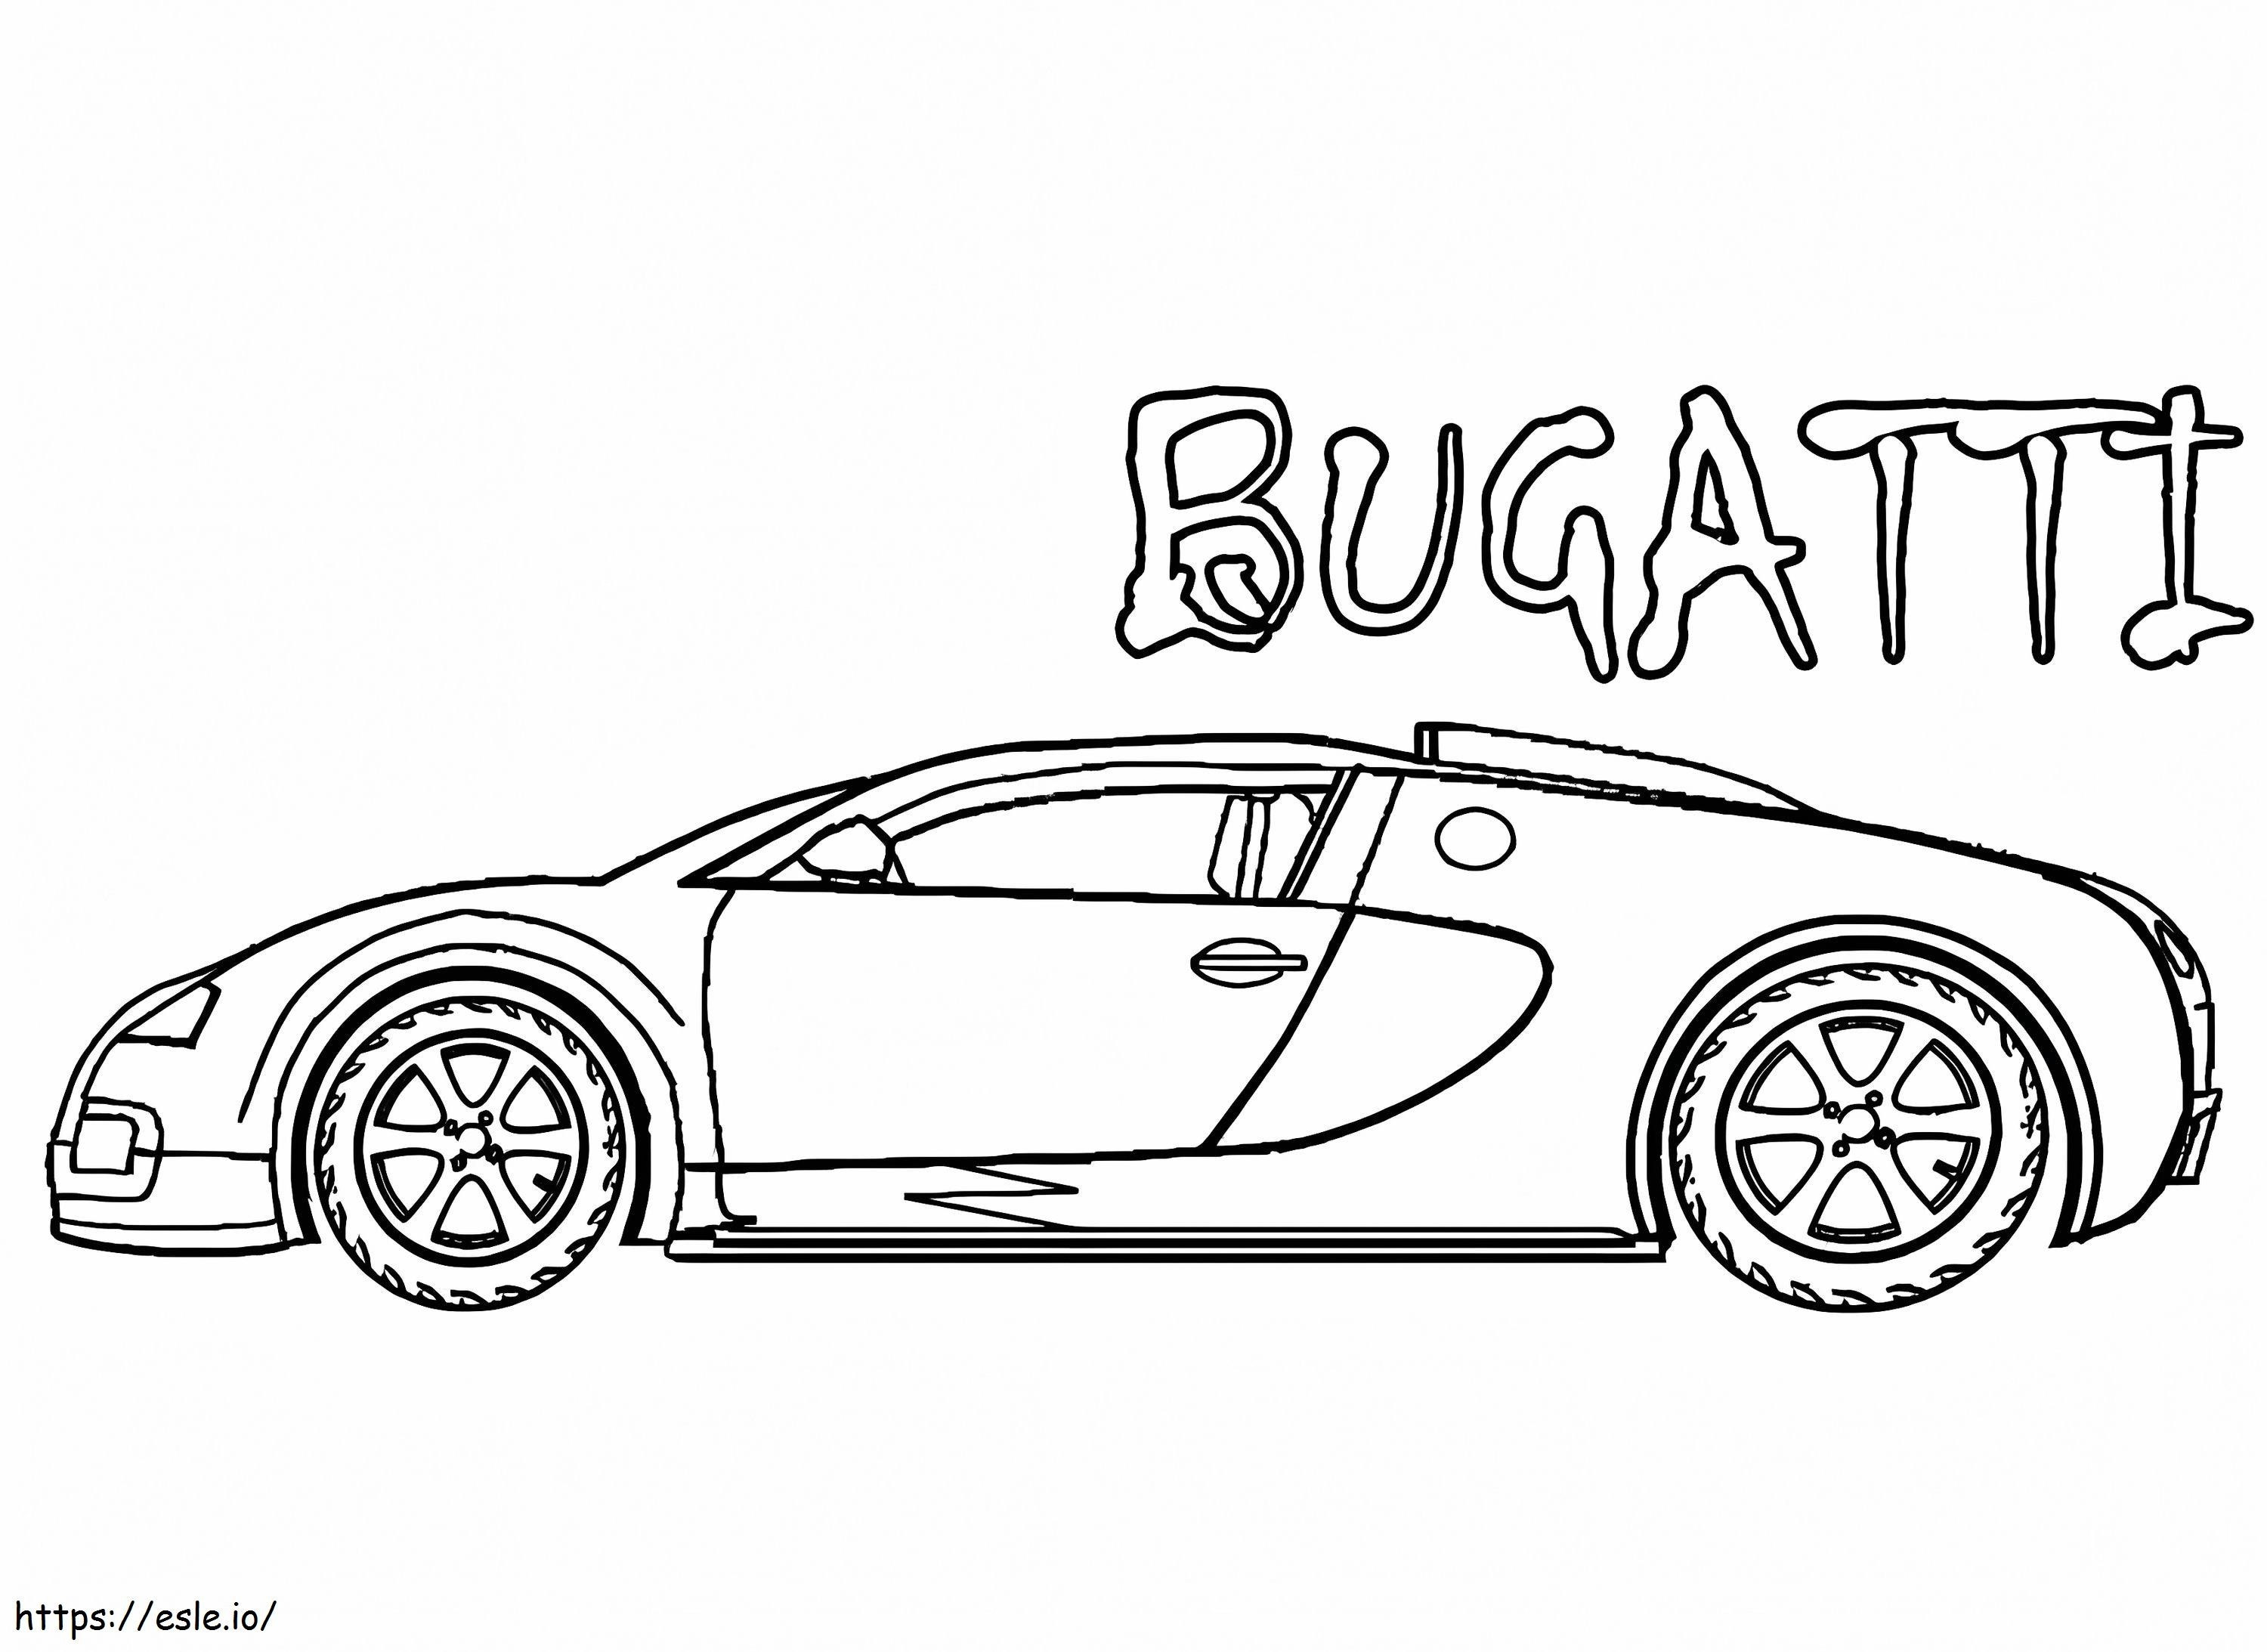 Bugatti3 kleurplaat kleurplaat